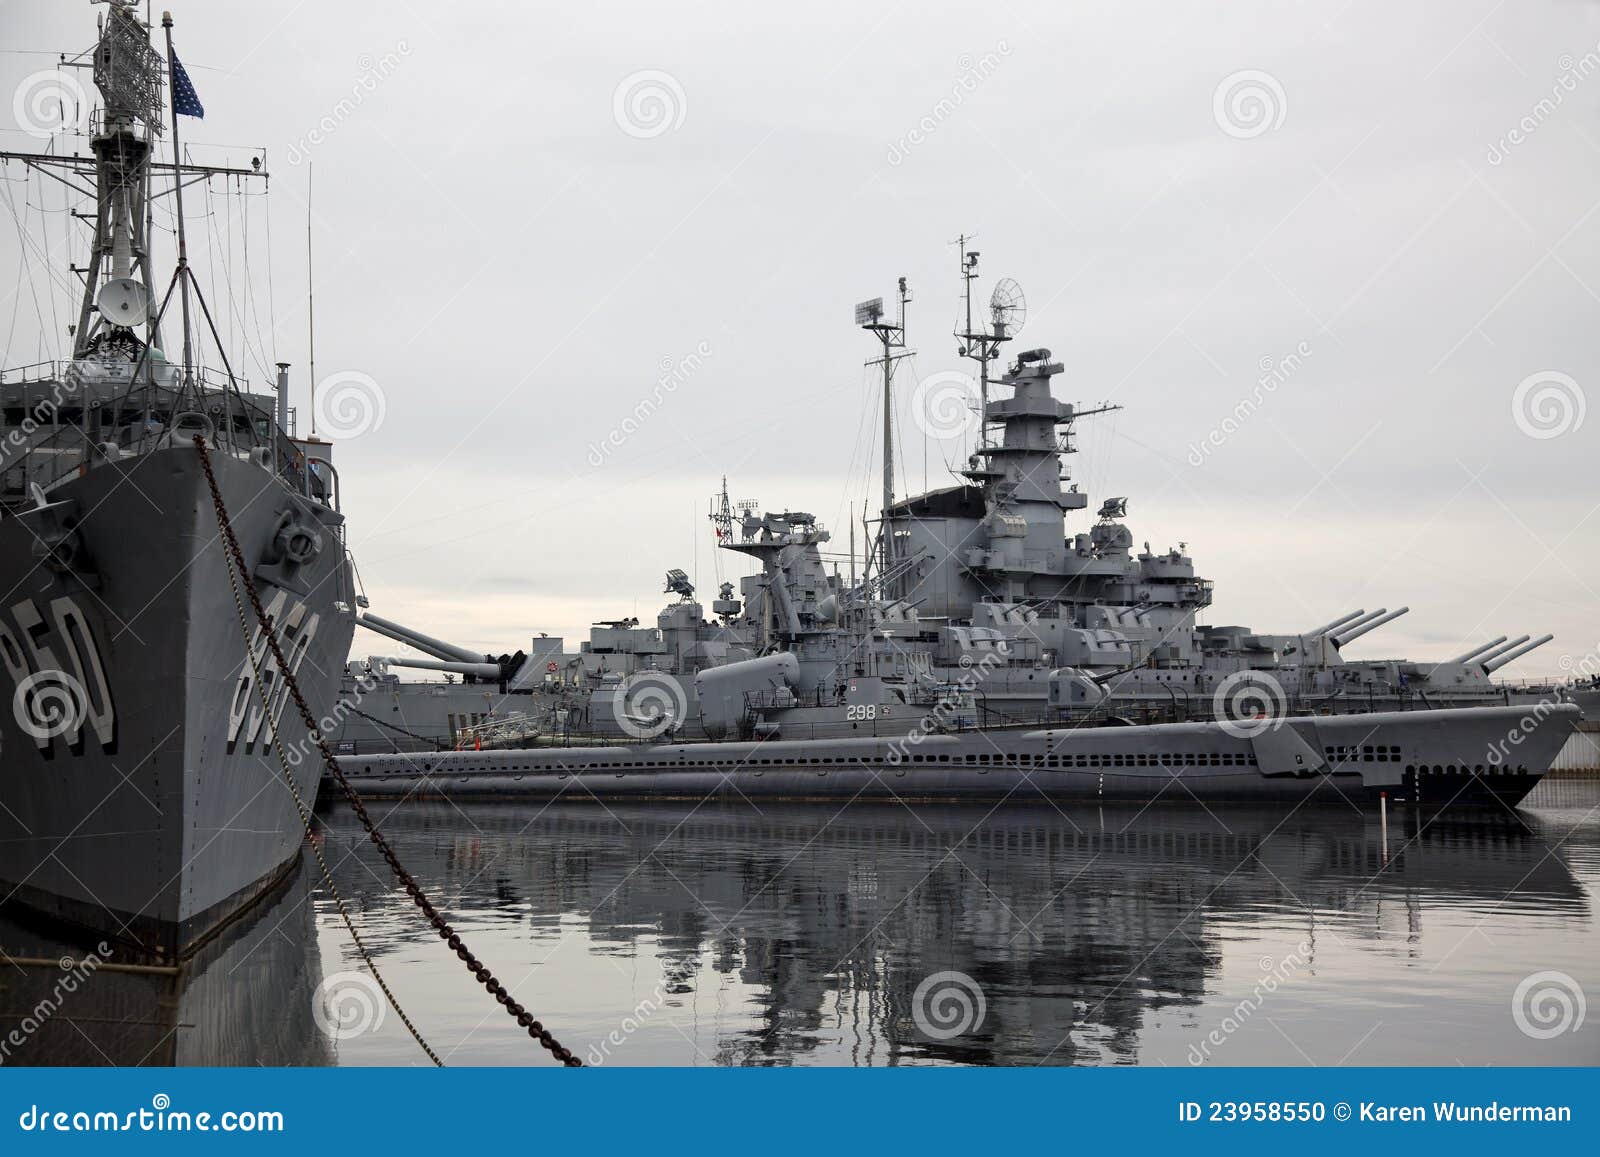 battleships at battleship cove